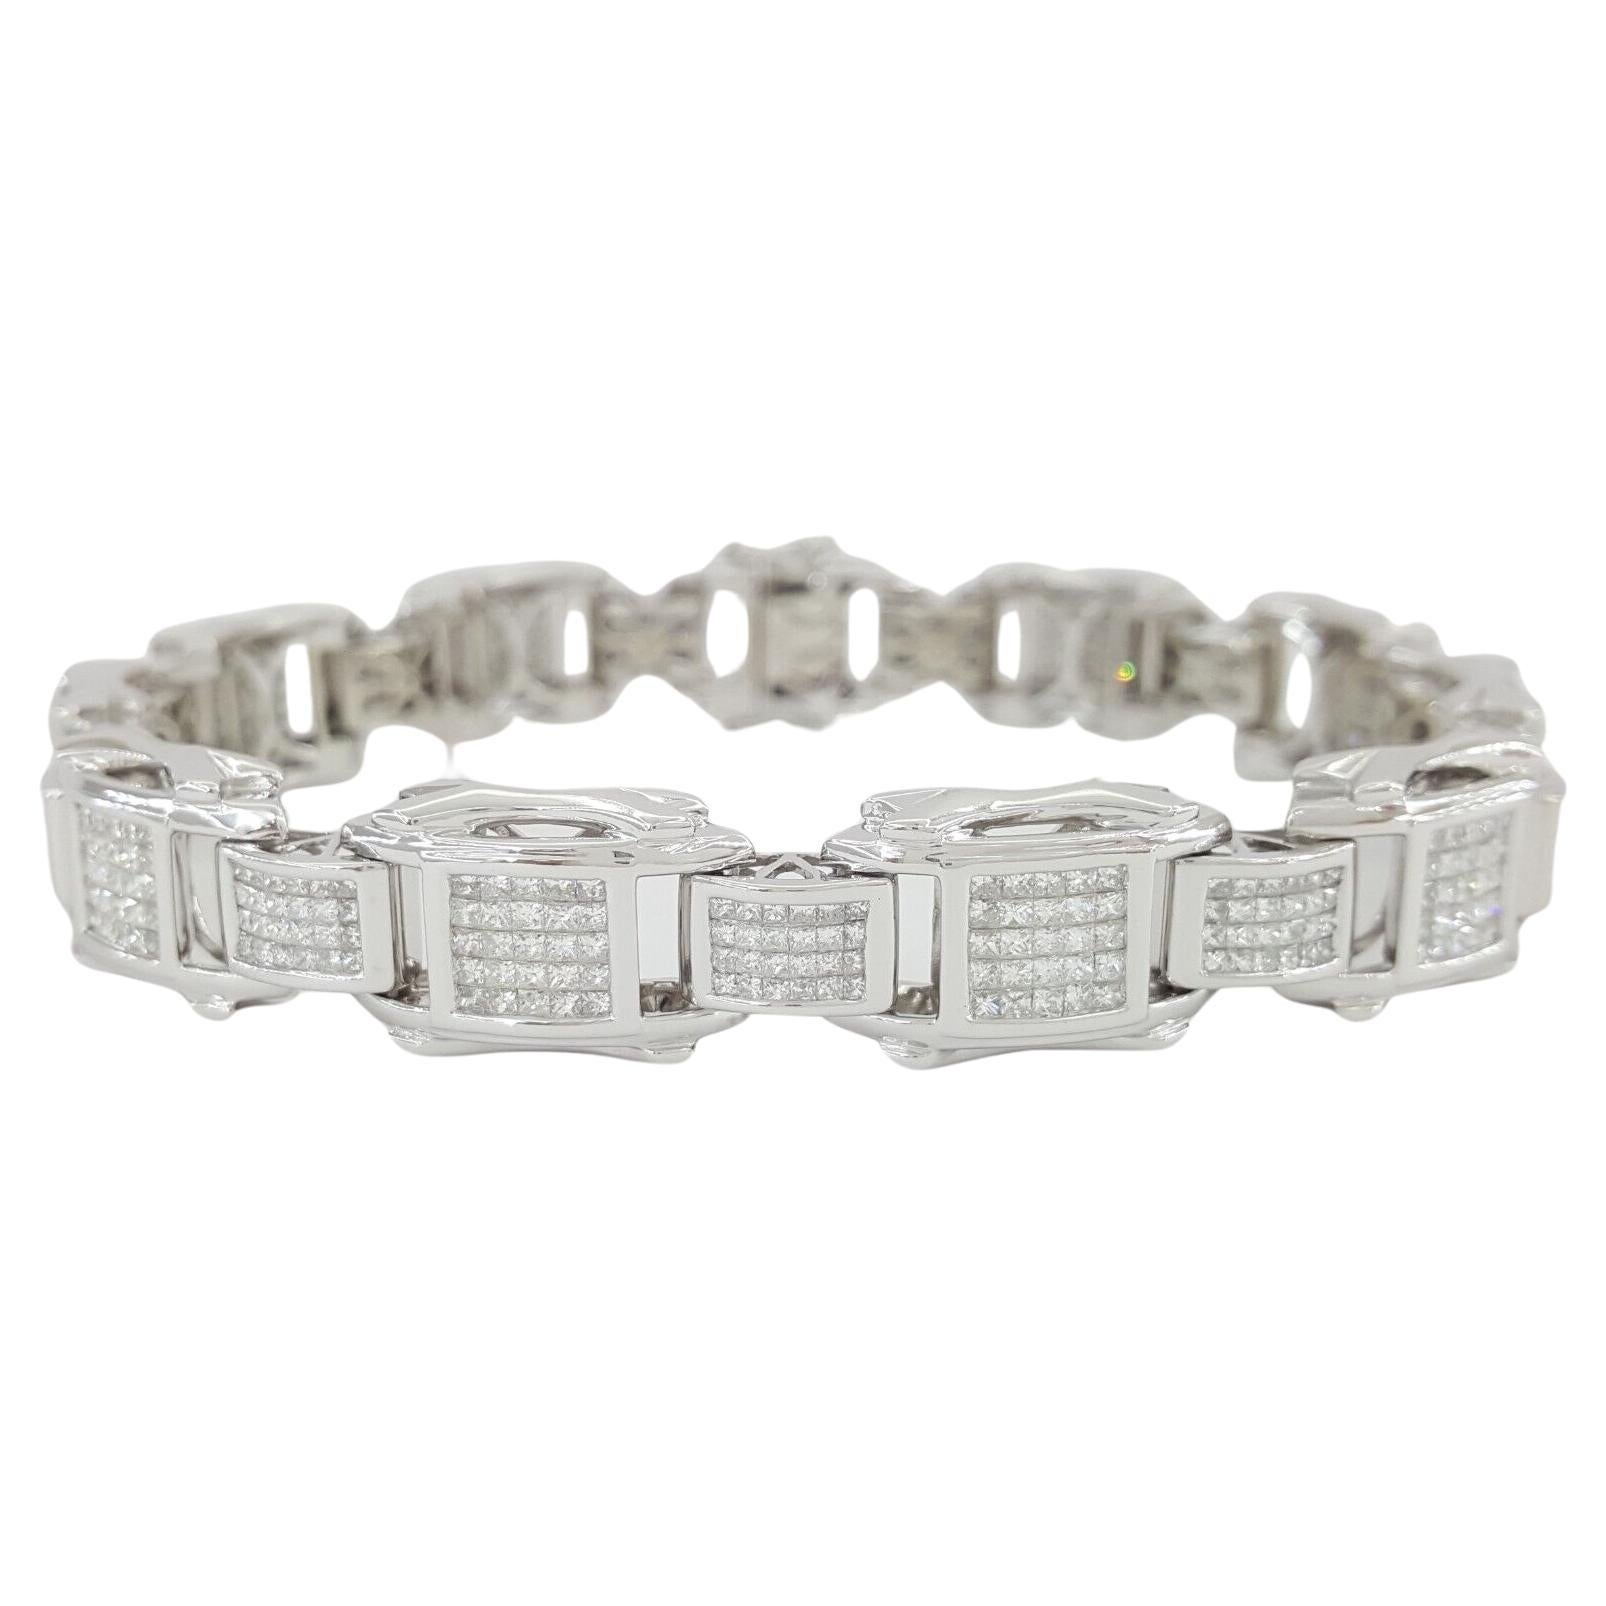  9 Carat Diamond Men's Bracelet For Sale